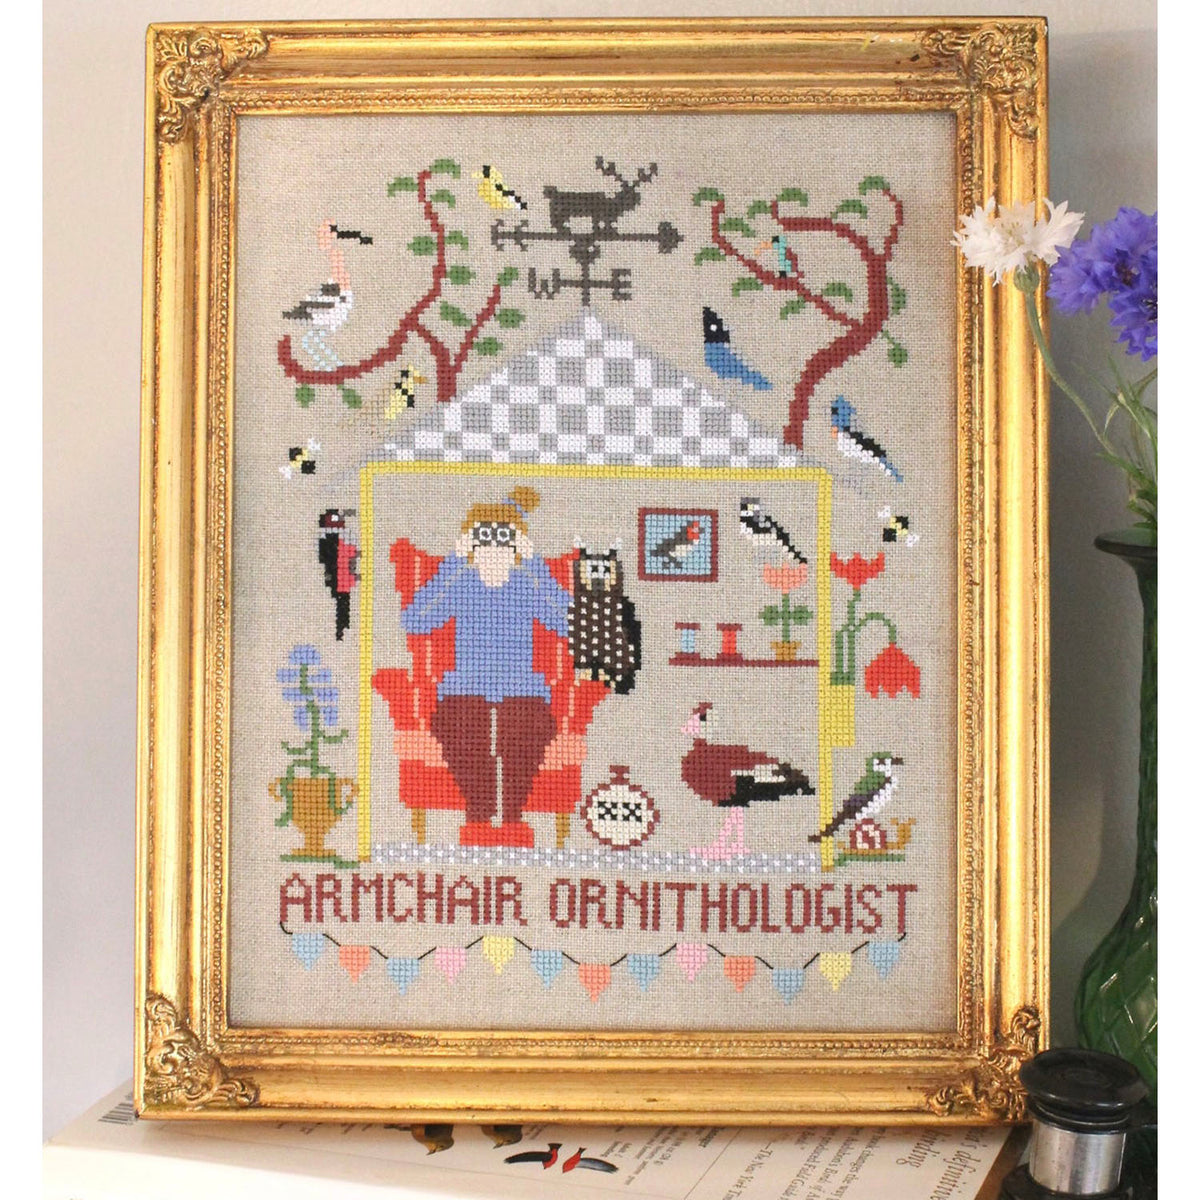 Armchair Ornithologist Cross Stitch Pattern